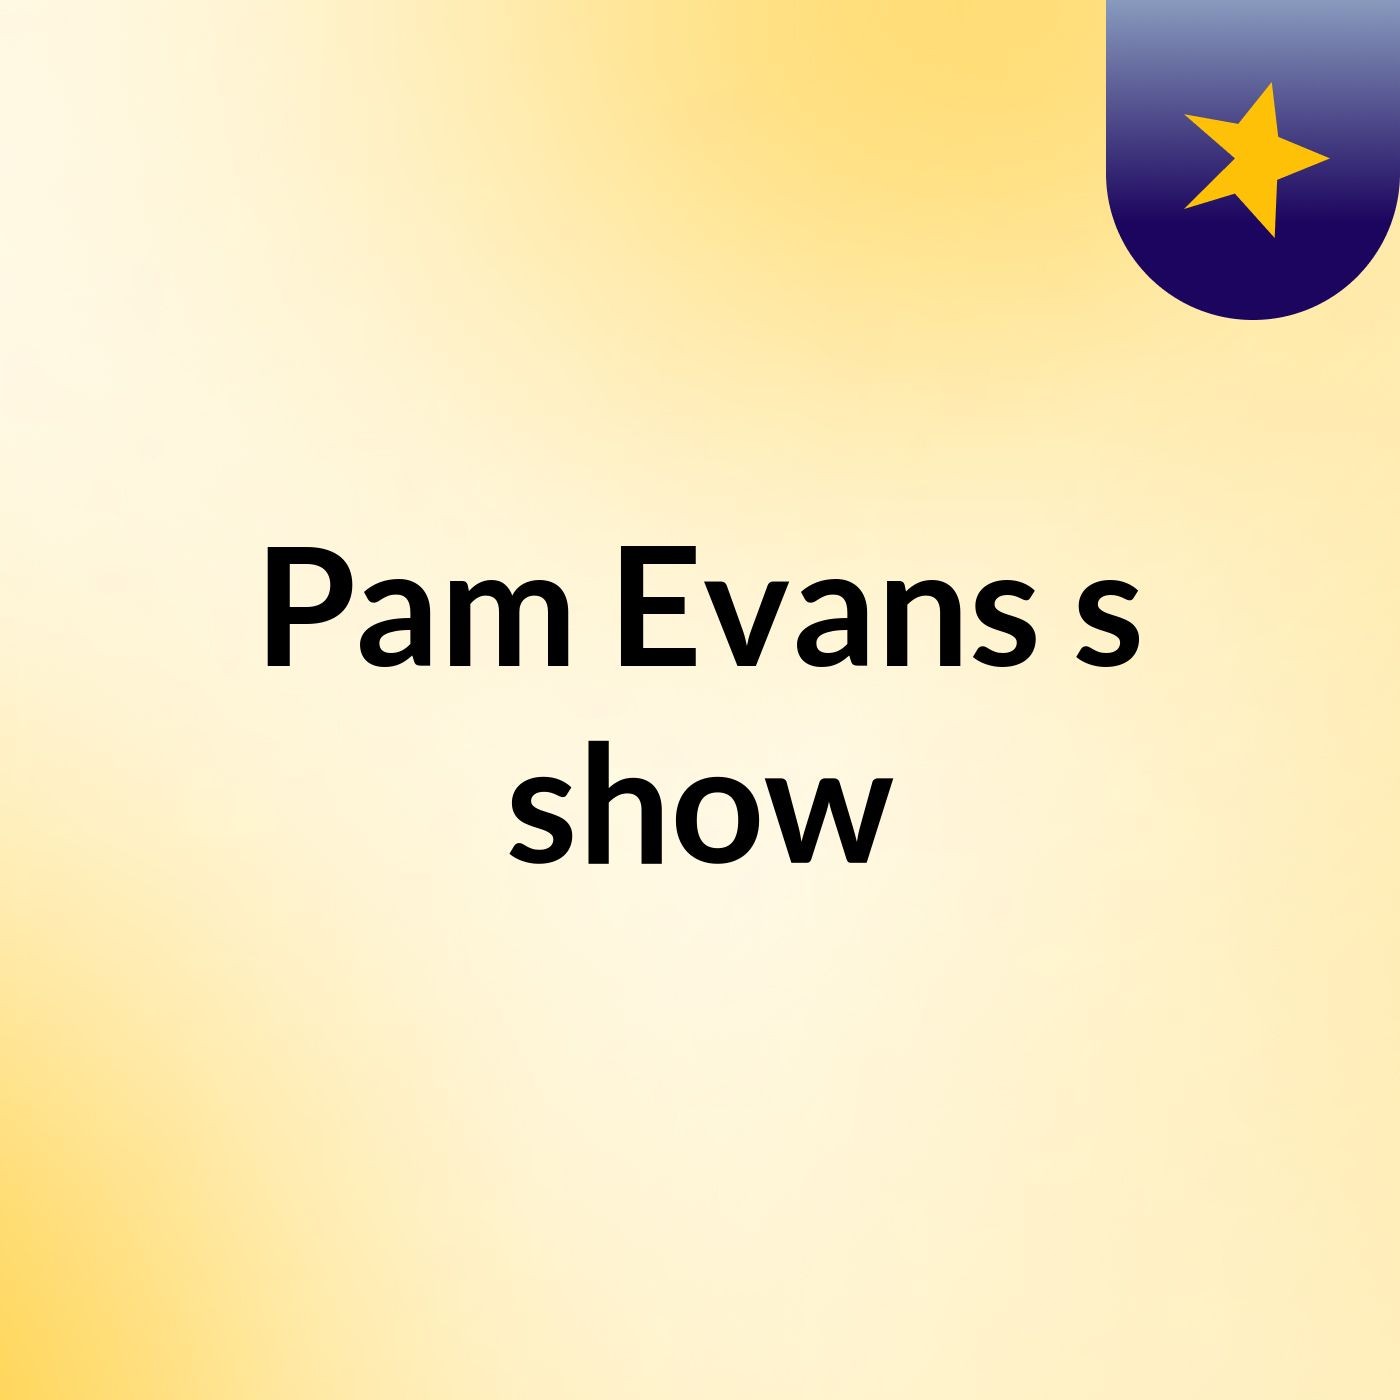 Pam Evans's show